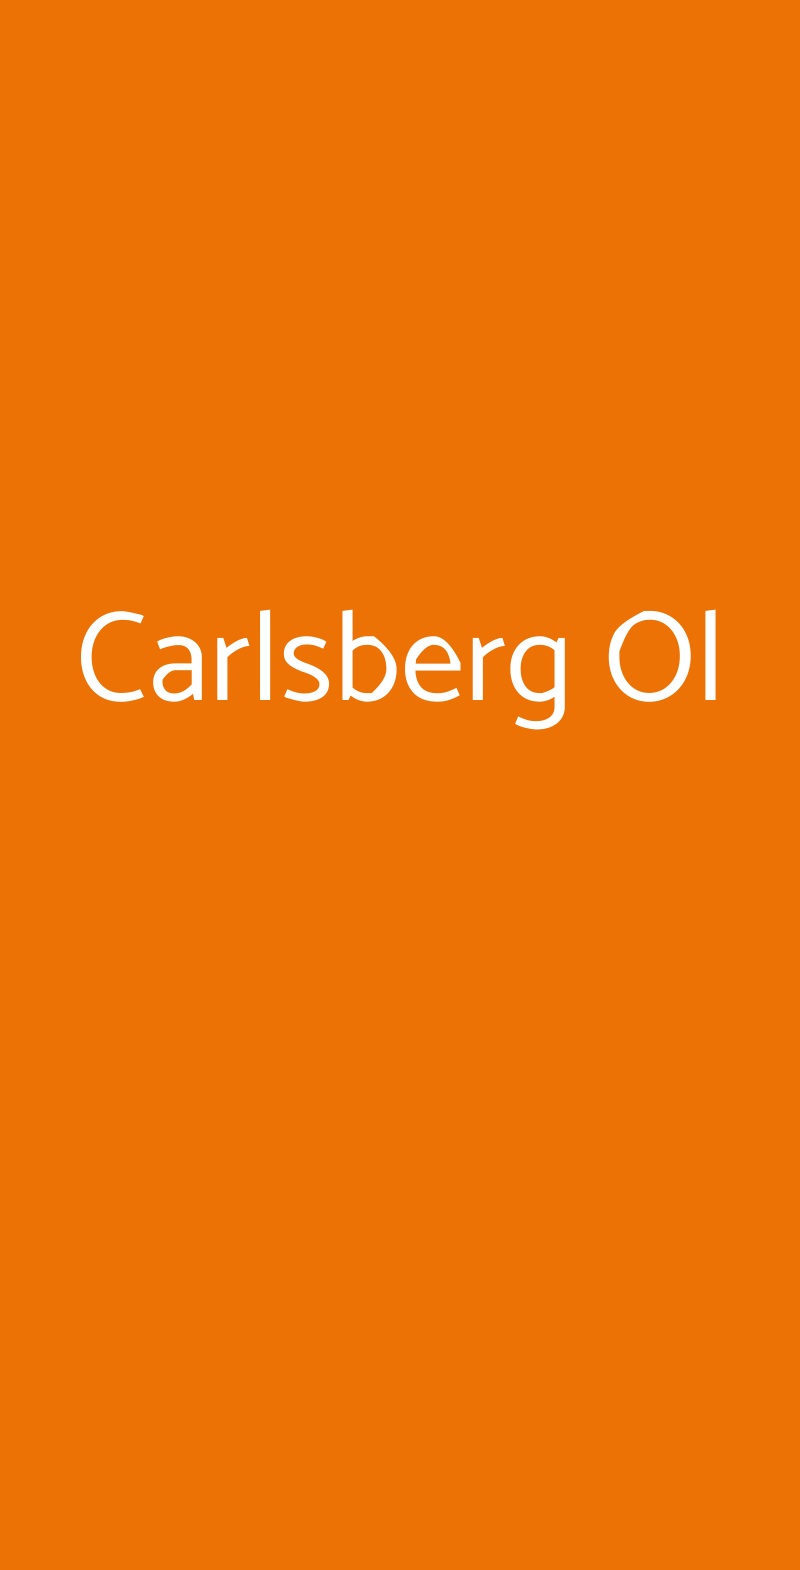 Carlsberg Ol Milano menù 1 pagina